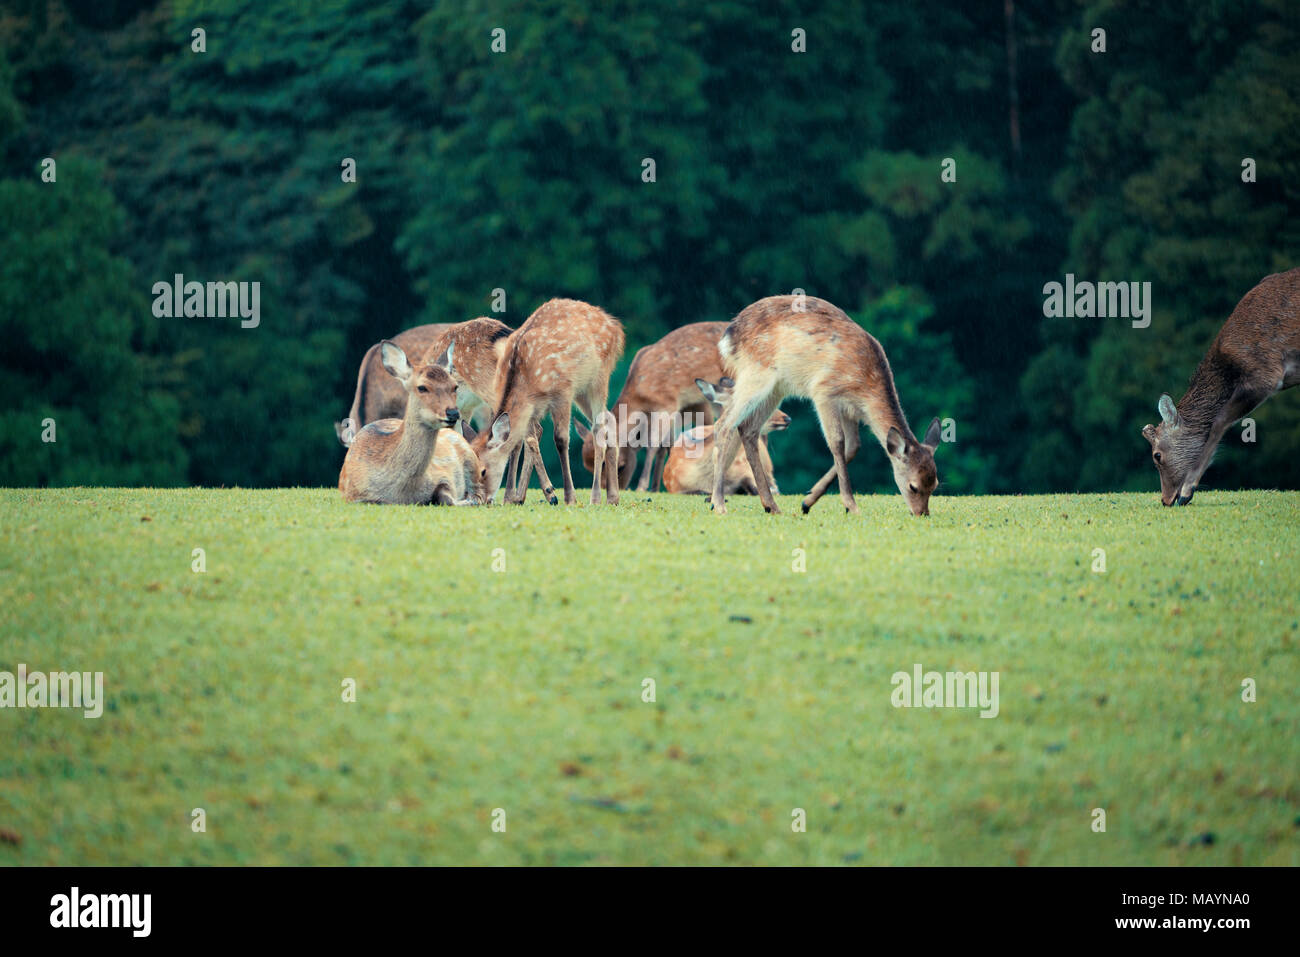 Wildlife deer in Nara Park Nara Prefecture Japan. Stock Photo